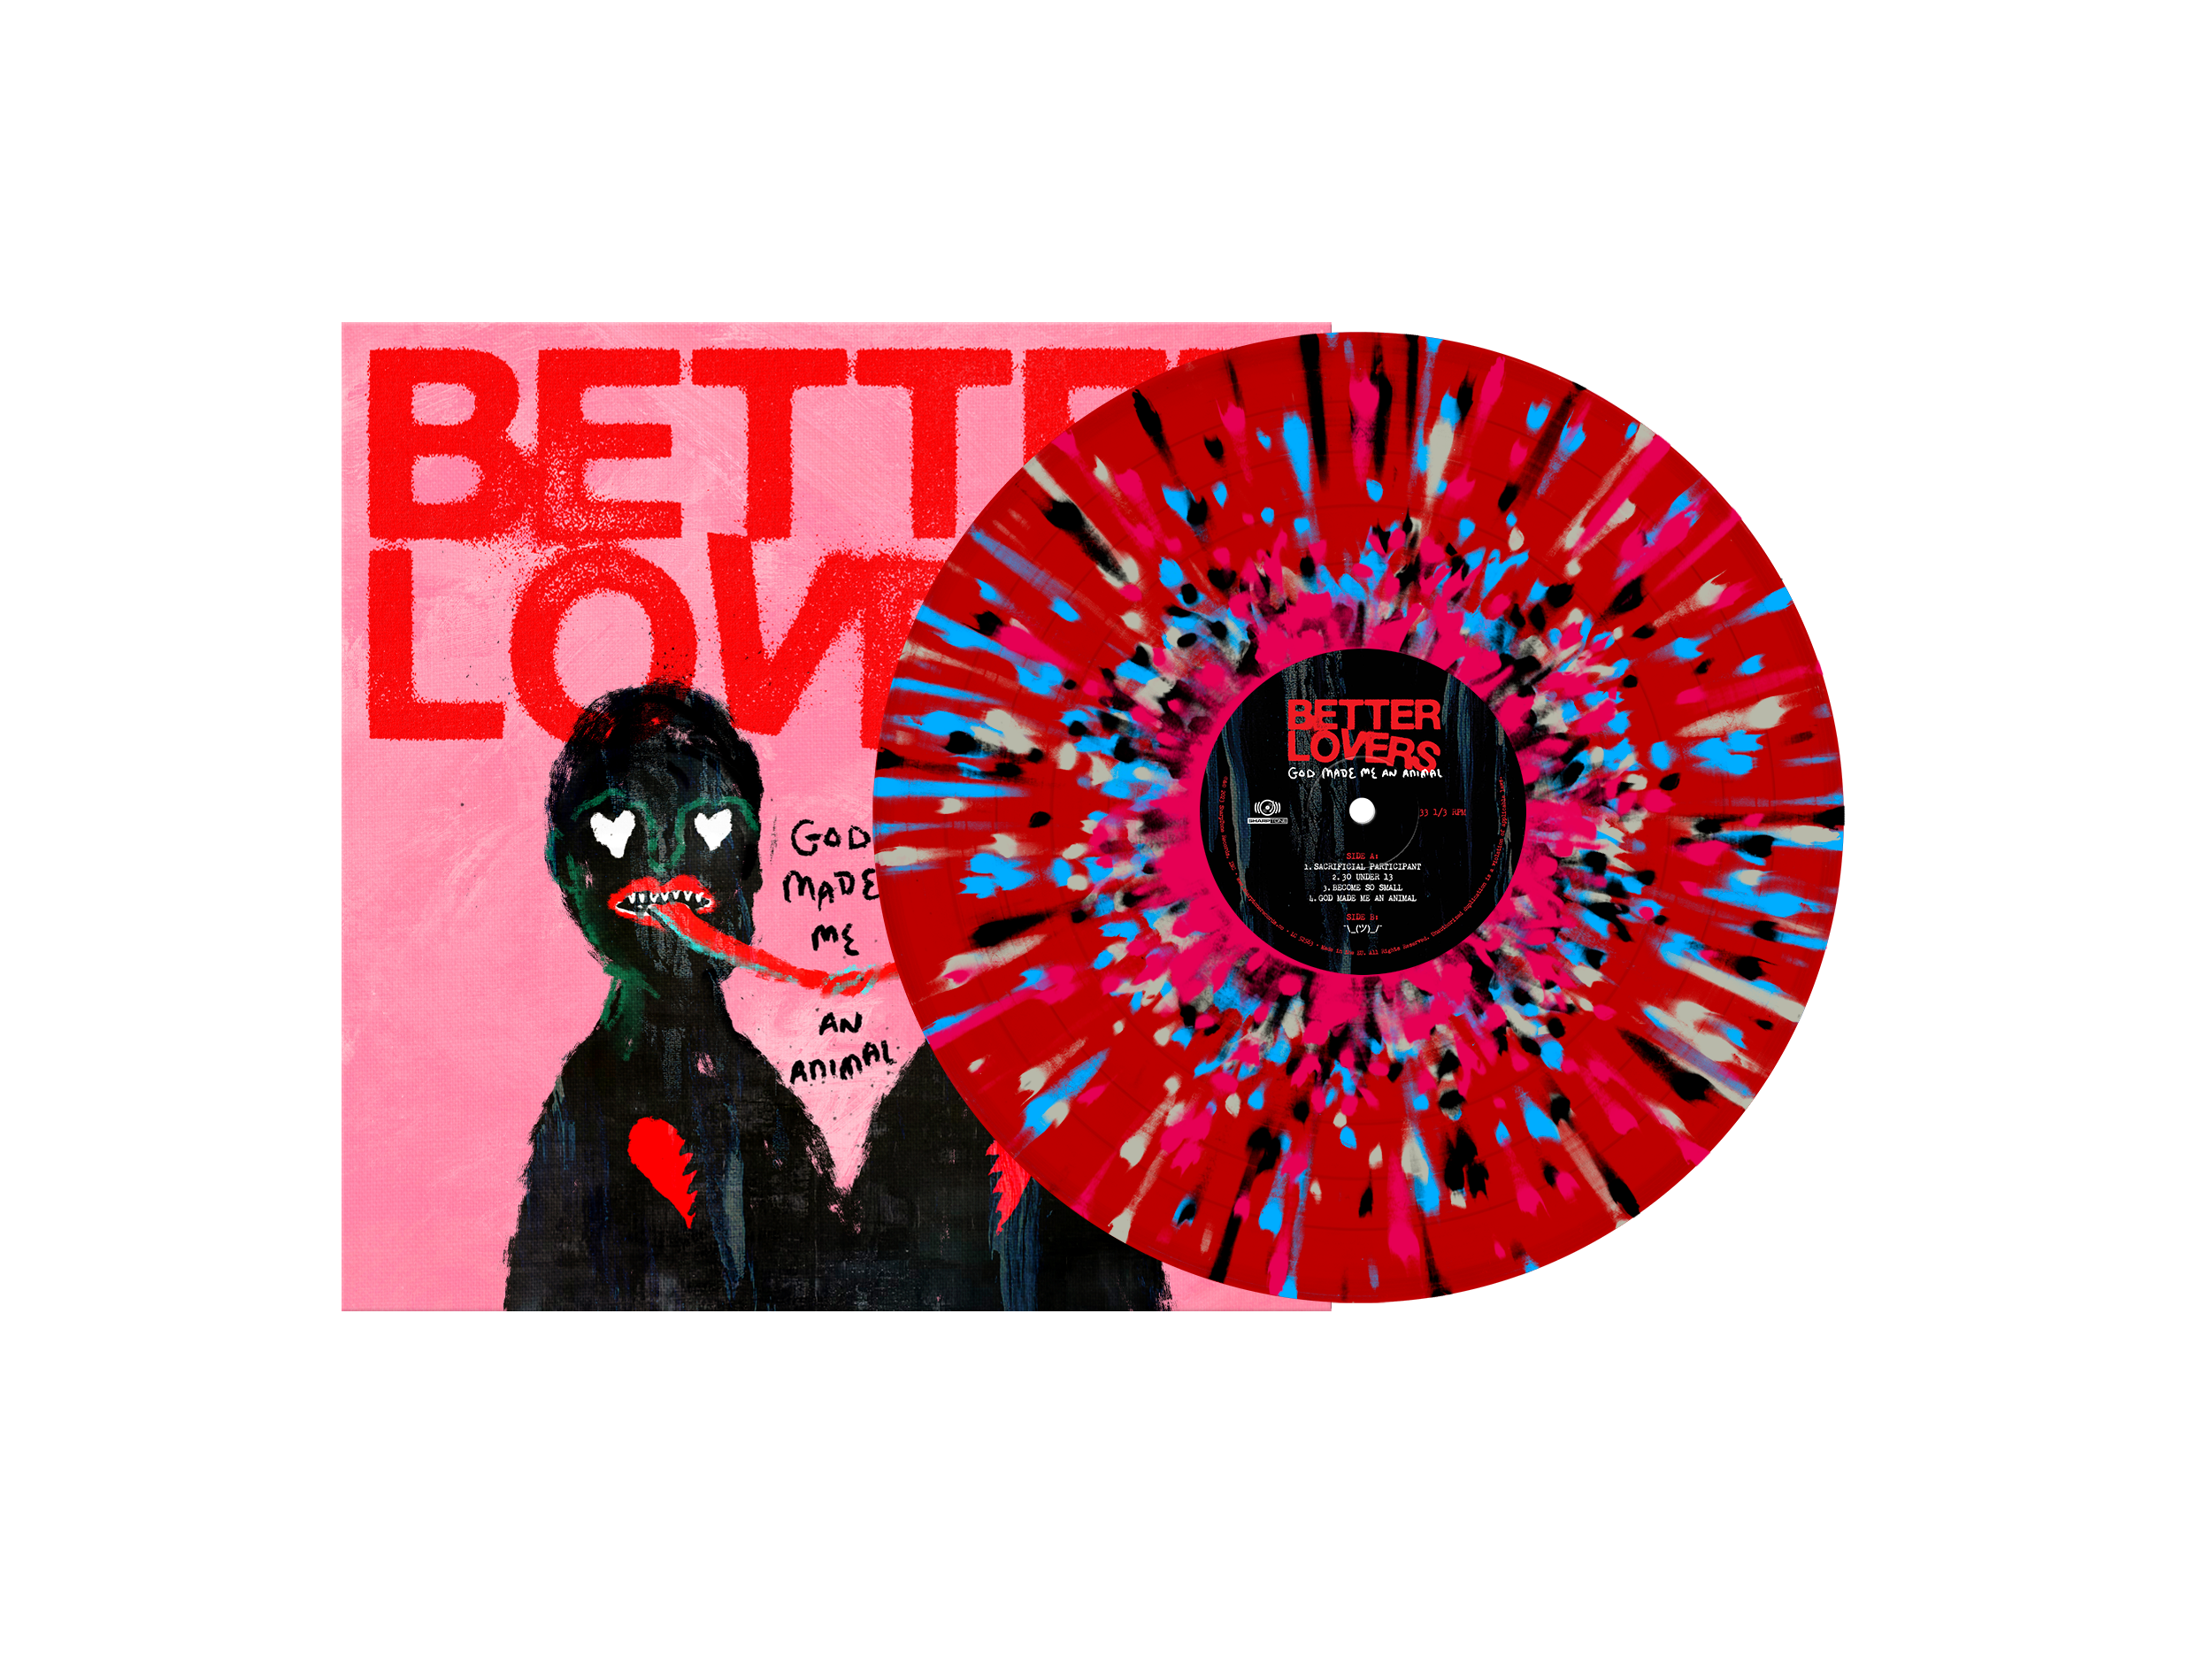 Better Lovers - God Made Me an Animal LP - Red w/ White, Turquoise, Black, Pink Splatter 